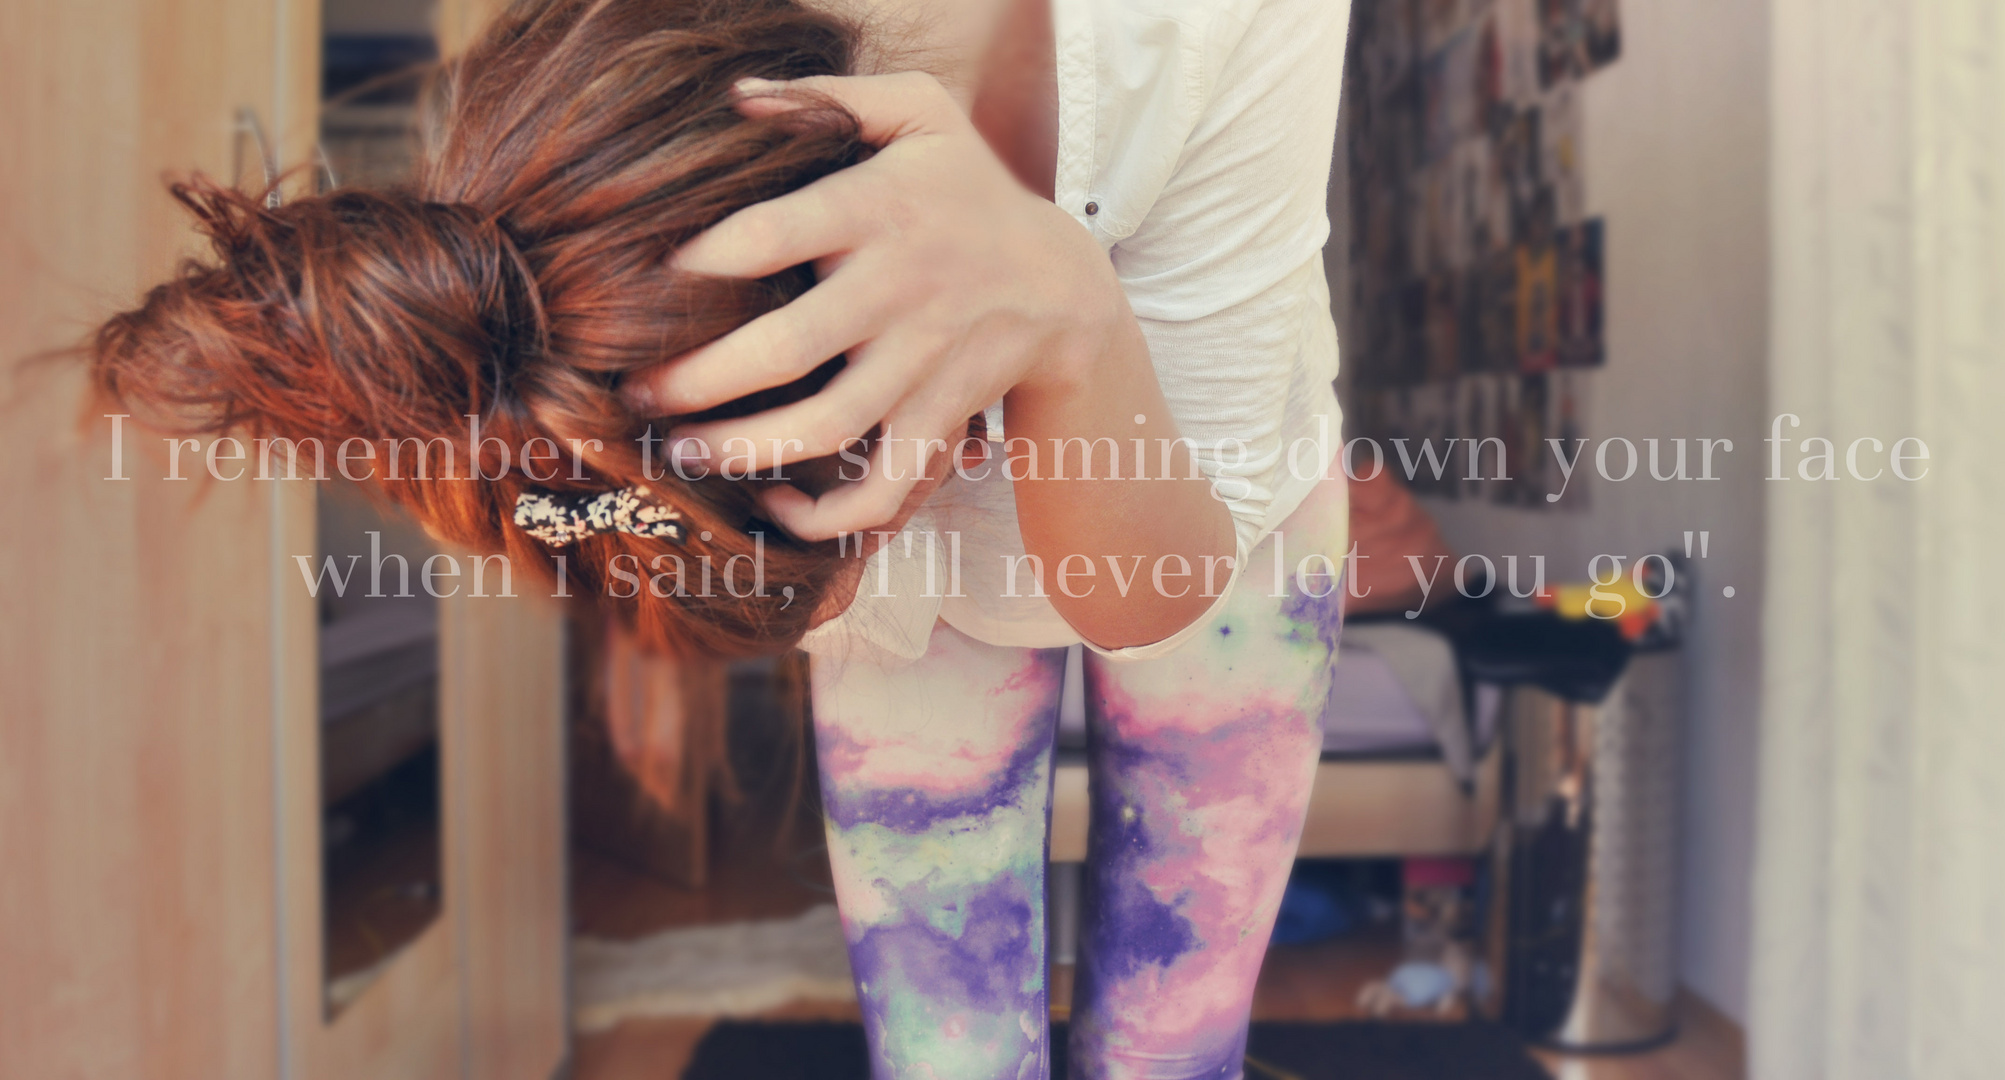 i'll never let you go